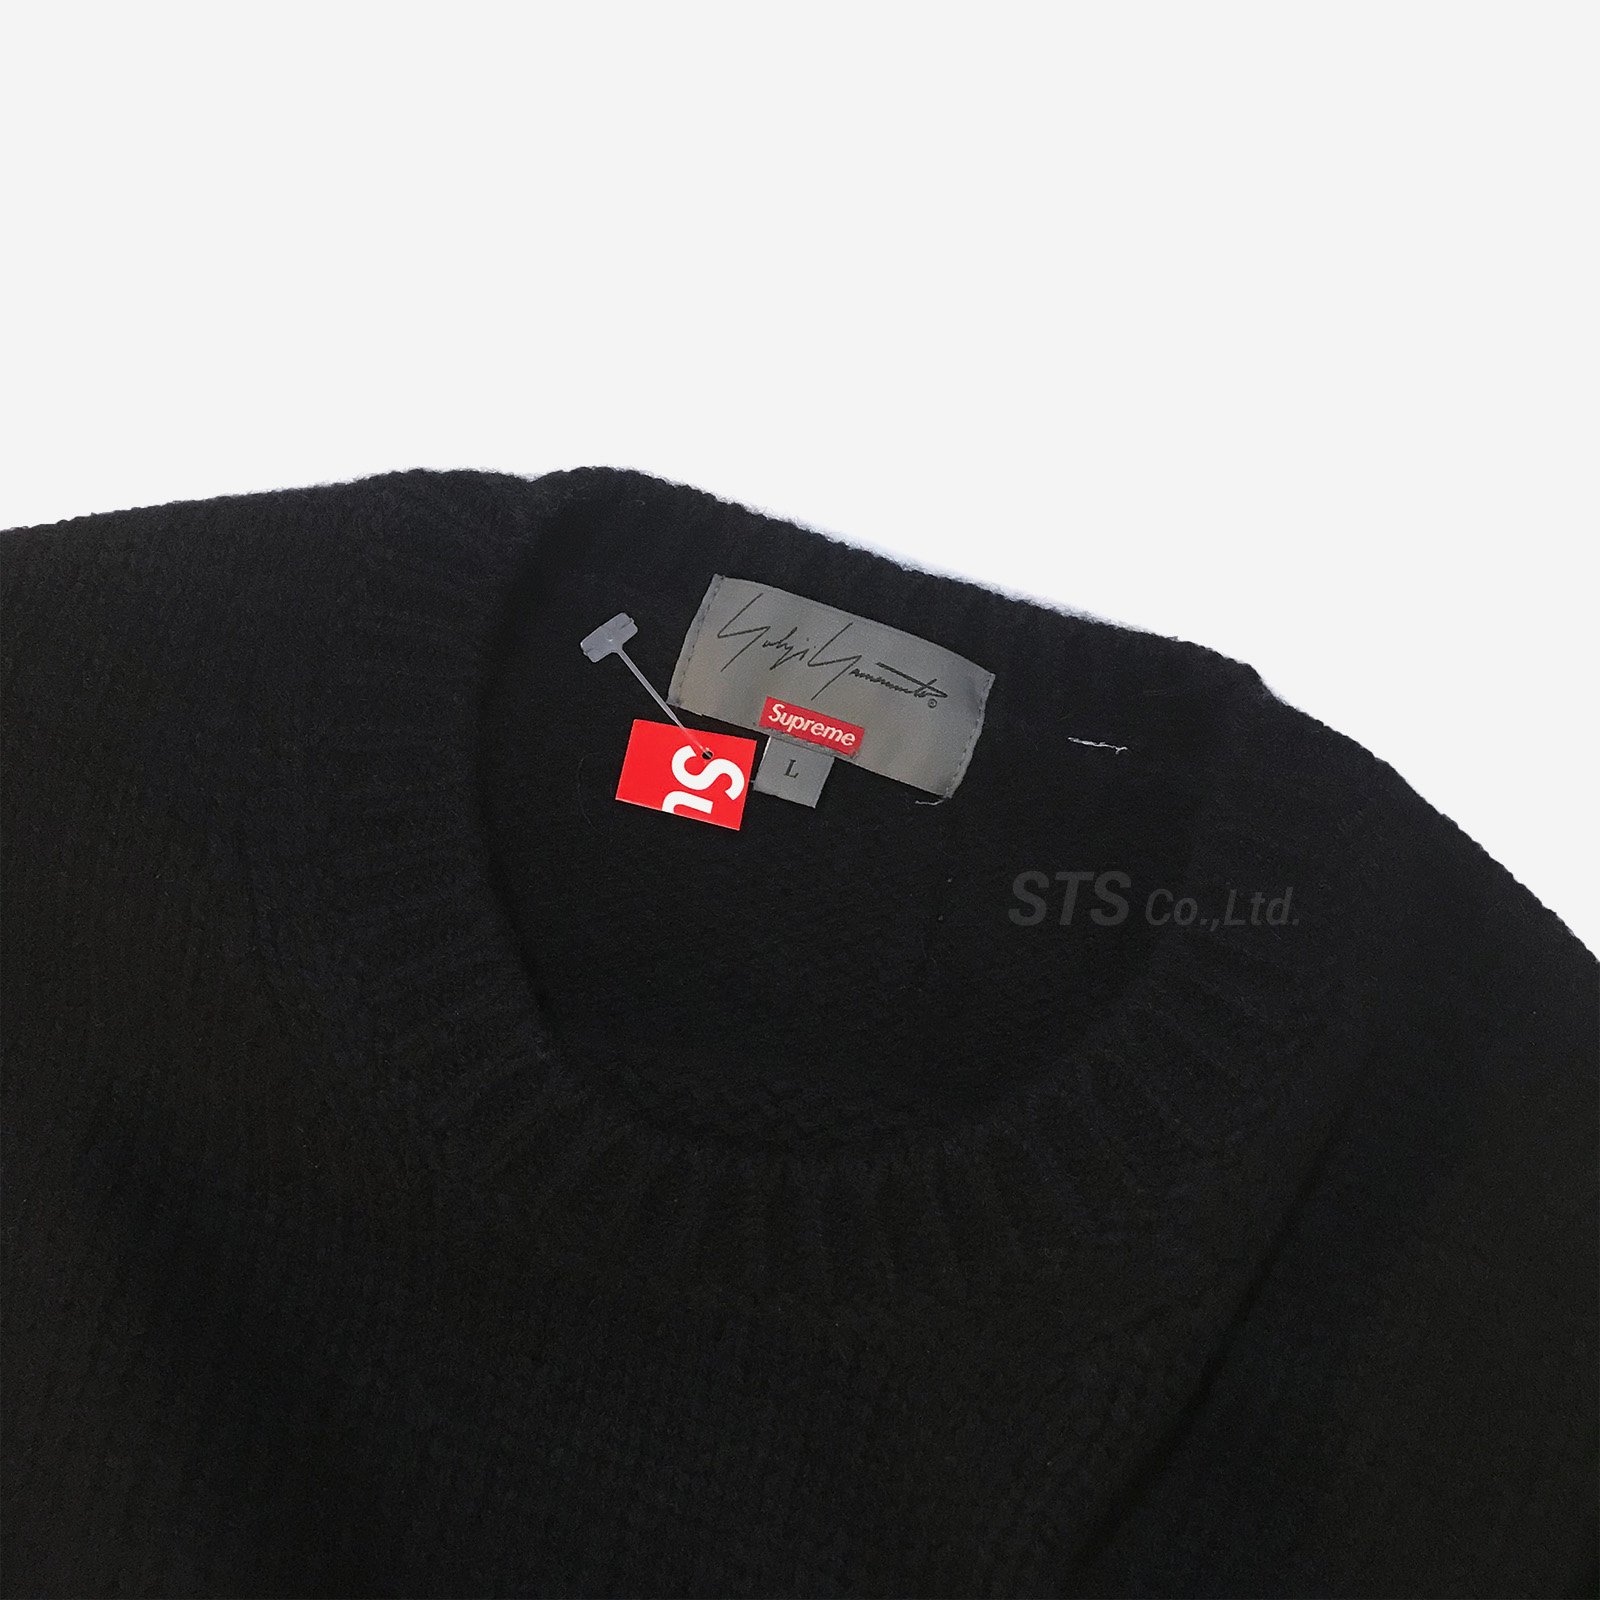 Supreme/Yohji Yamamoto Sweater - ParkSIDER